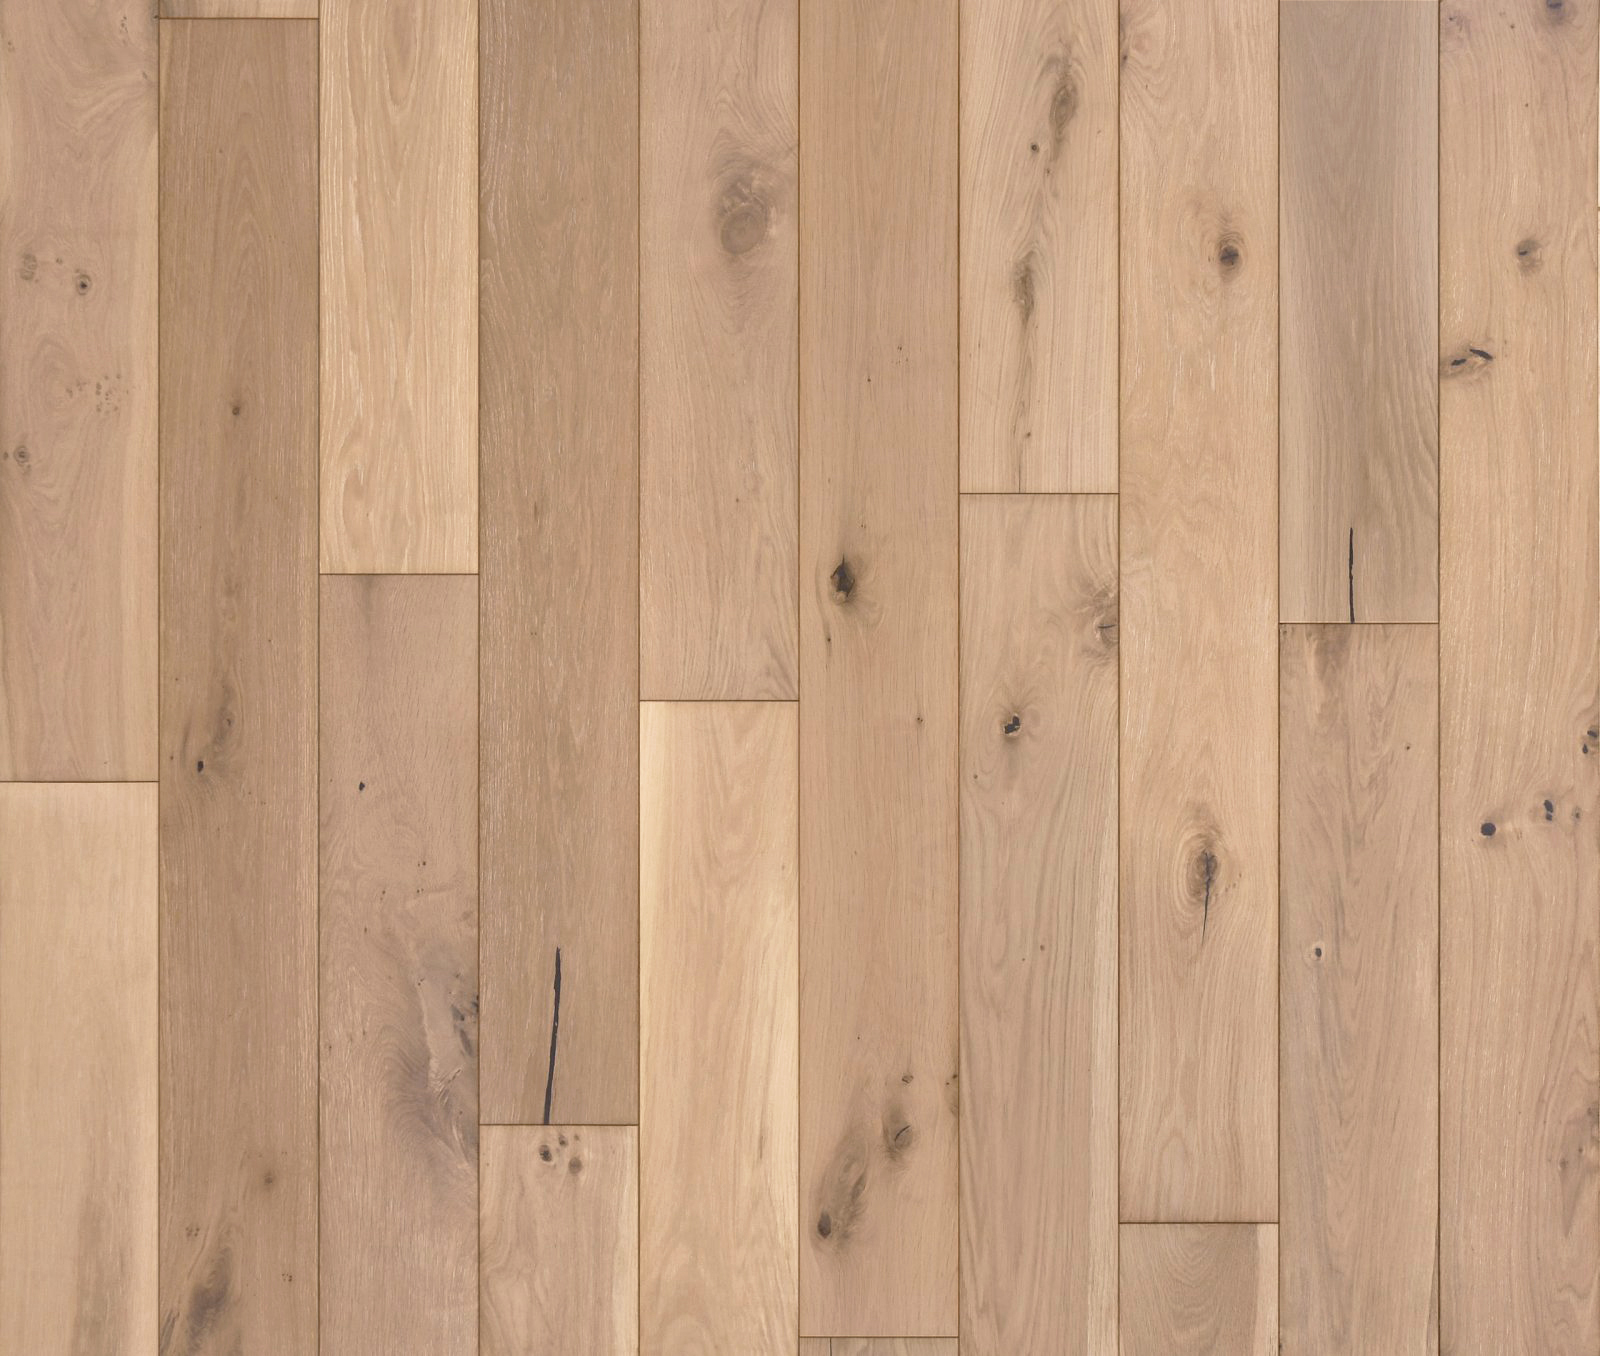 European Oak Hardwood Floors Provence